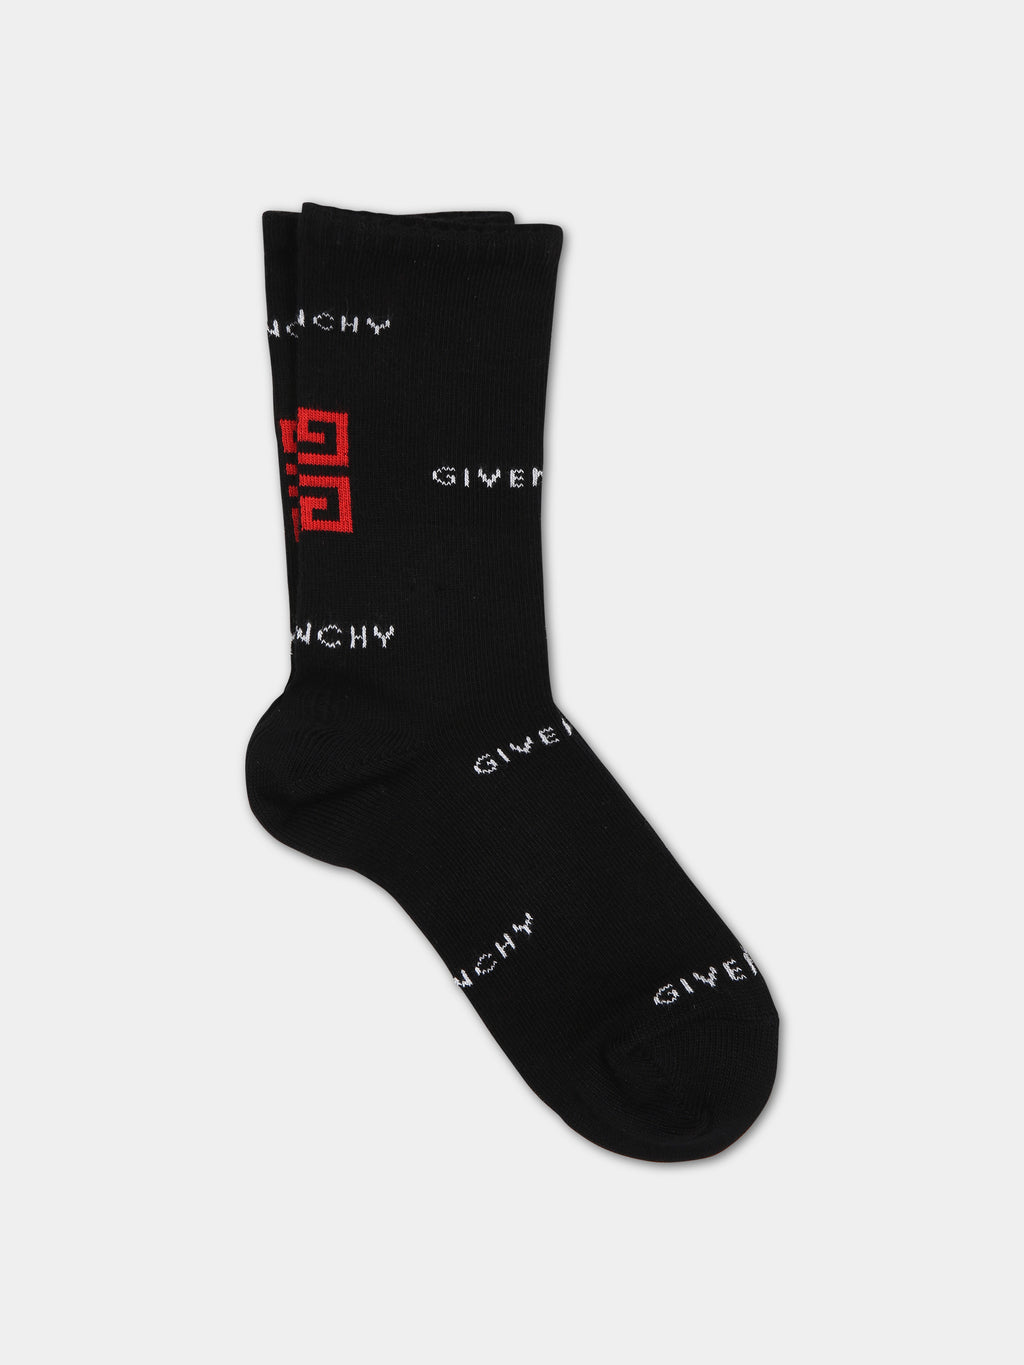 Black socks for boy with logo